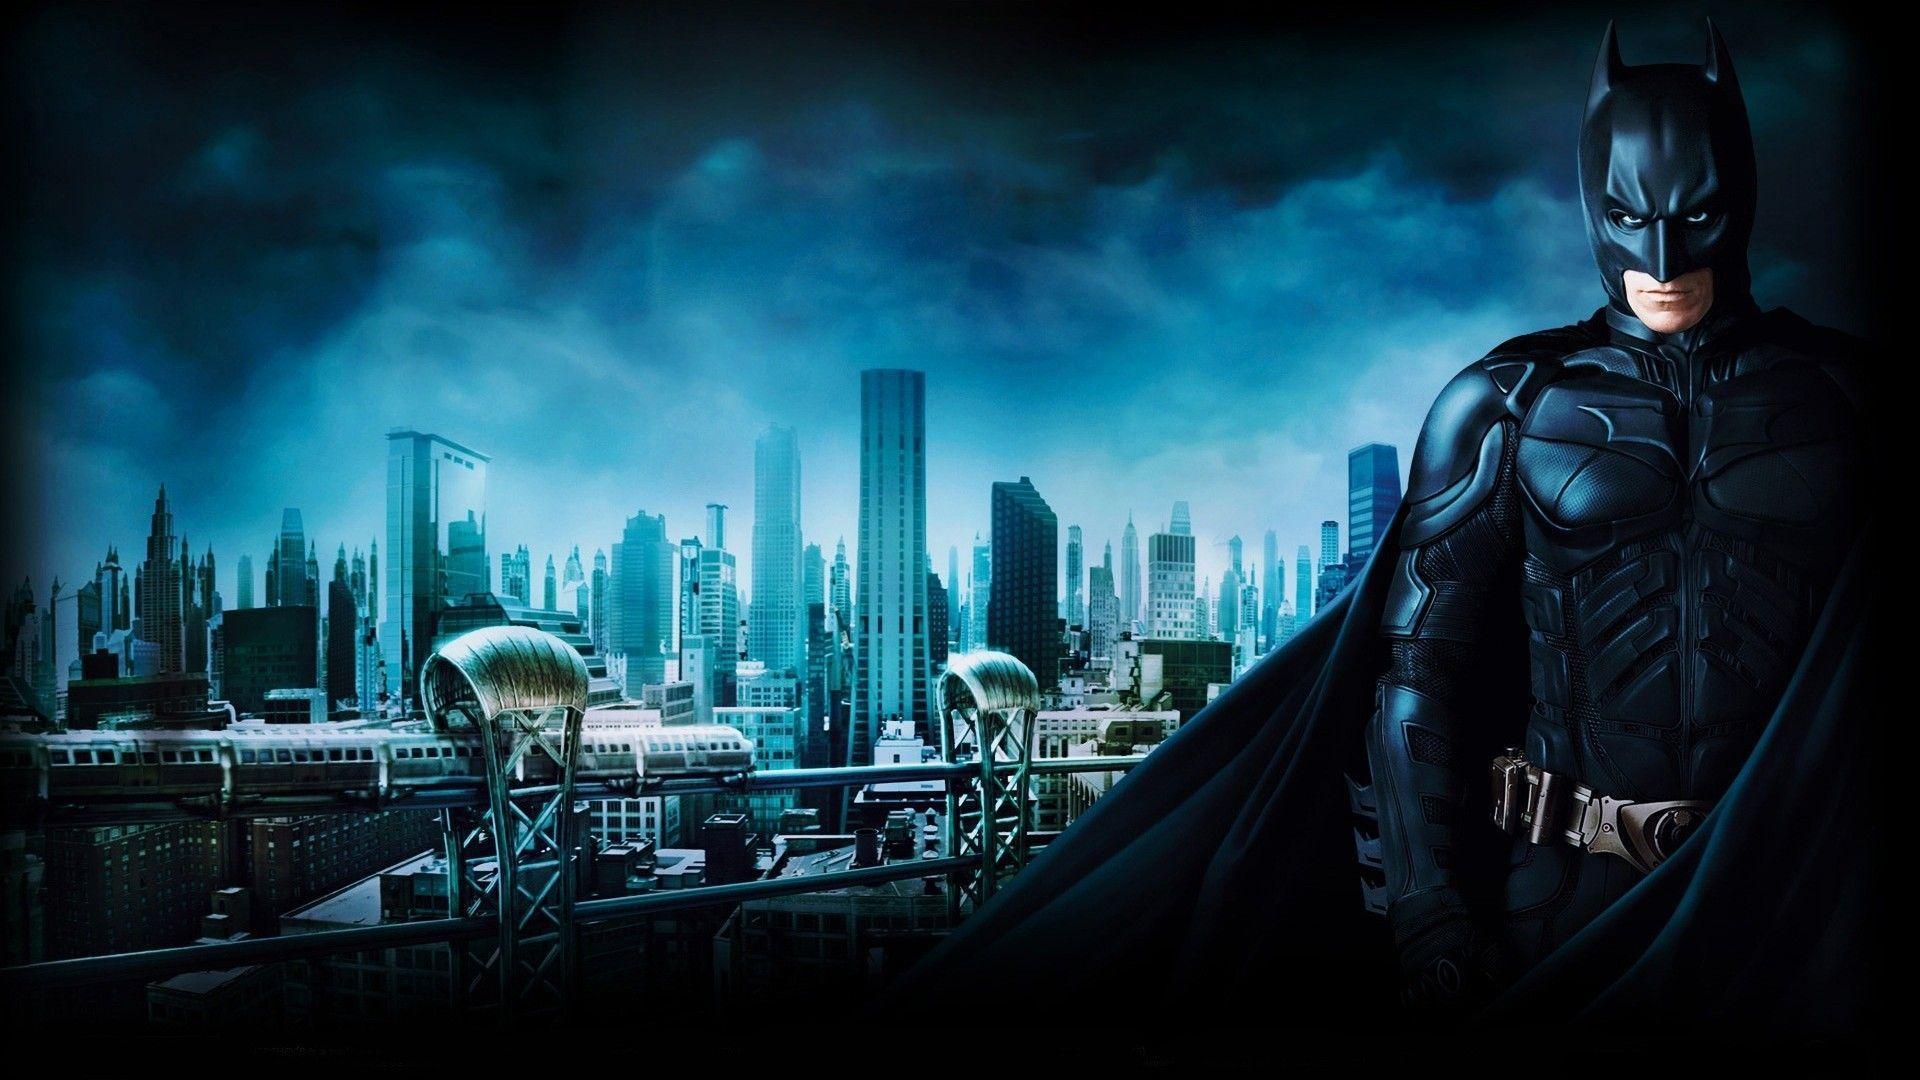 Batman Begins Gotham Train image HD Wallpaper. High Quality